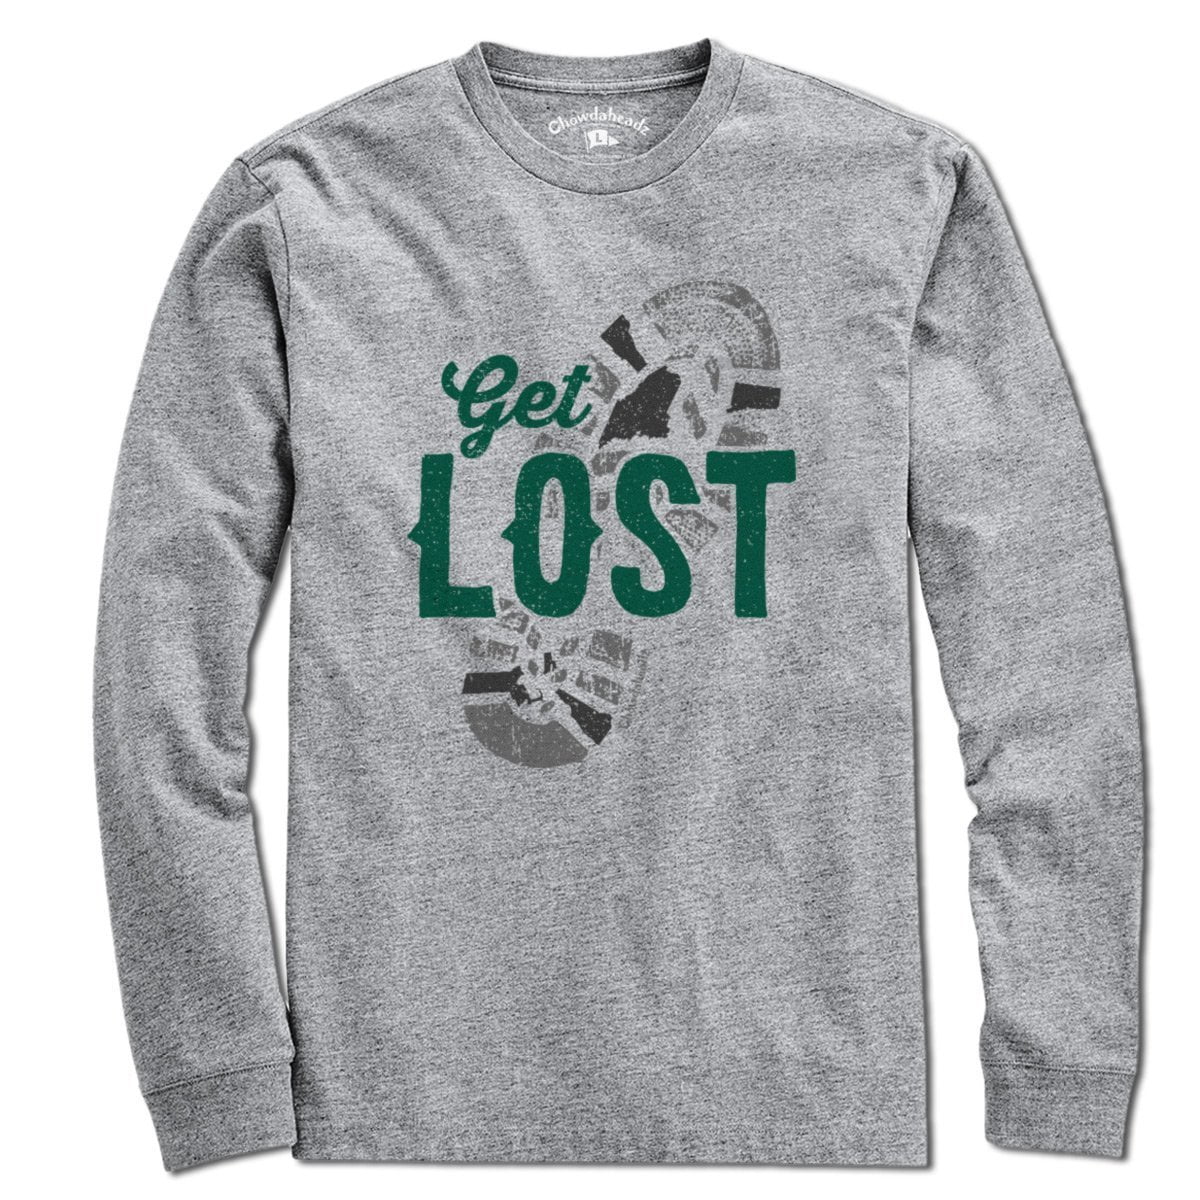 Get Lost New England T-Shirt - Chowdaheadz